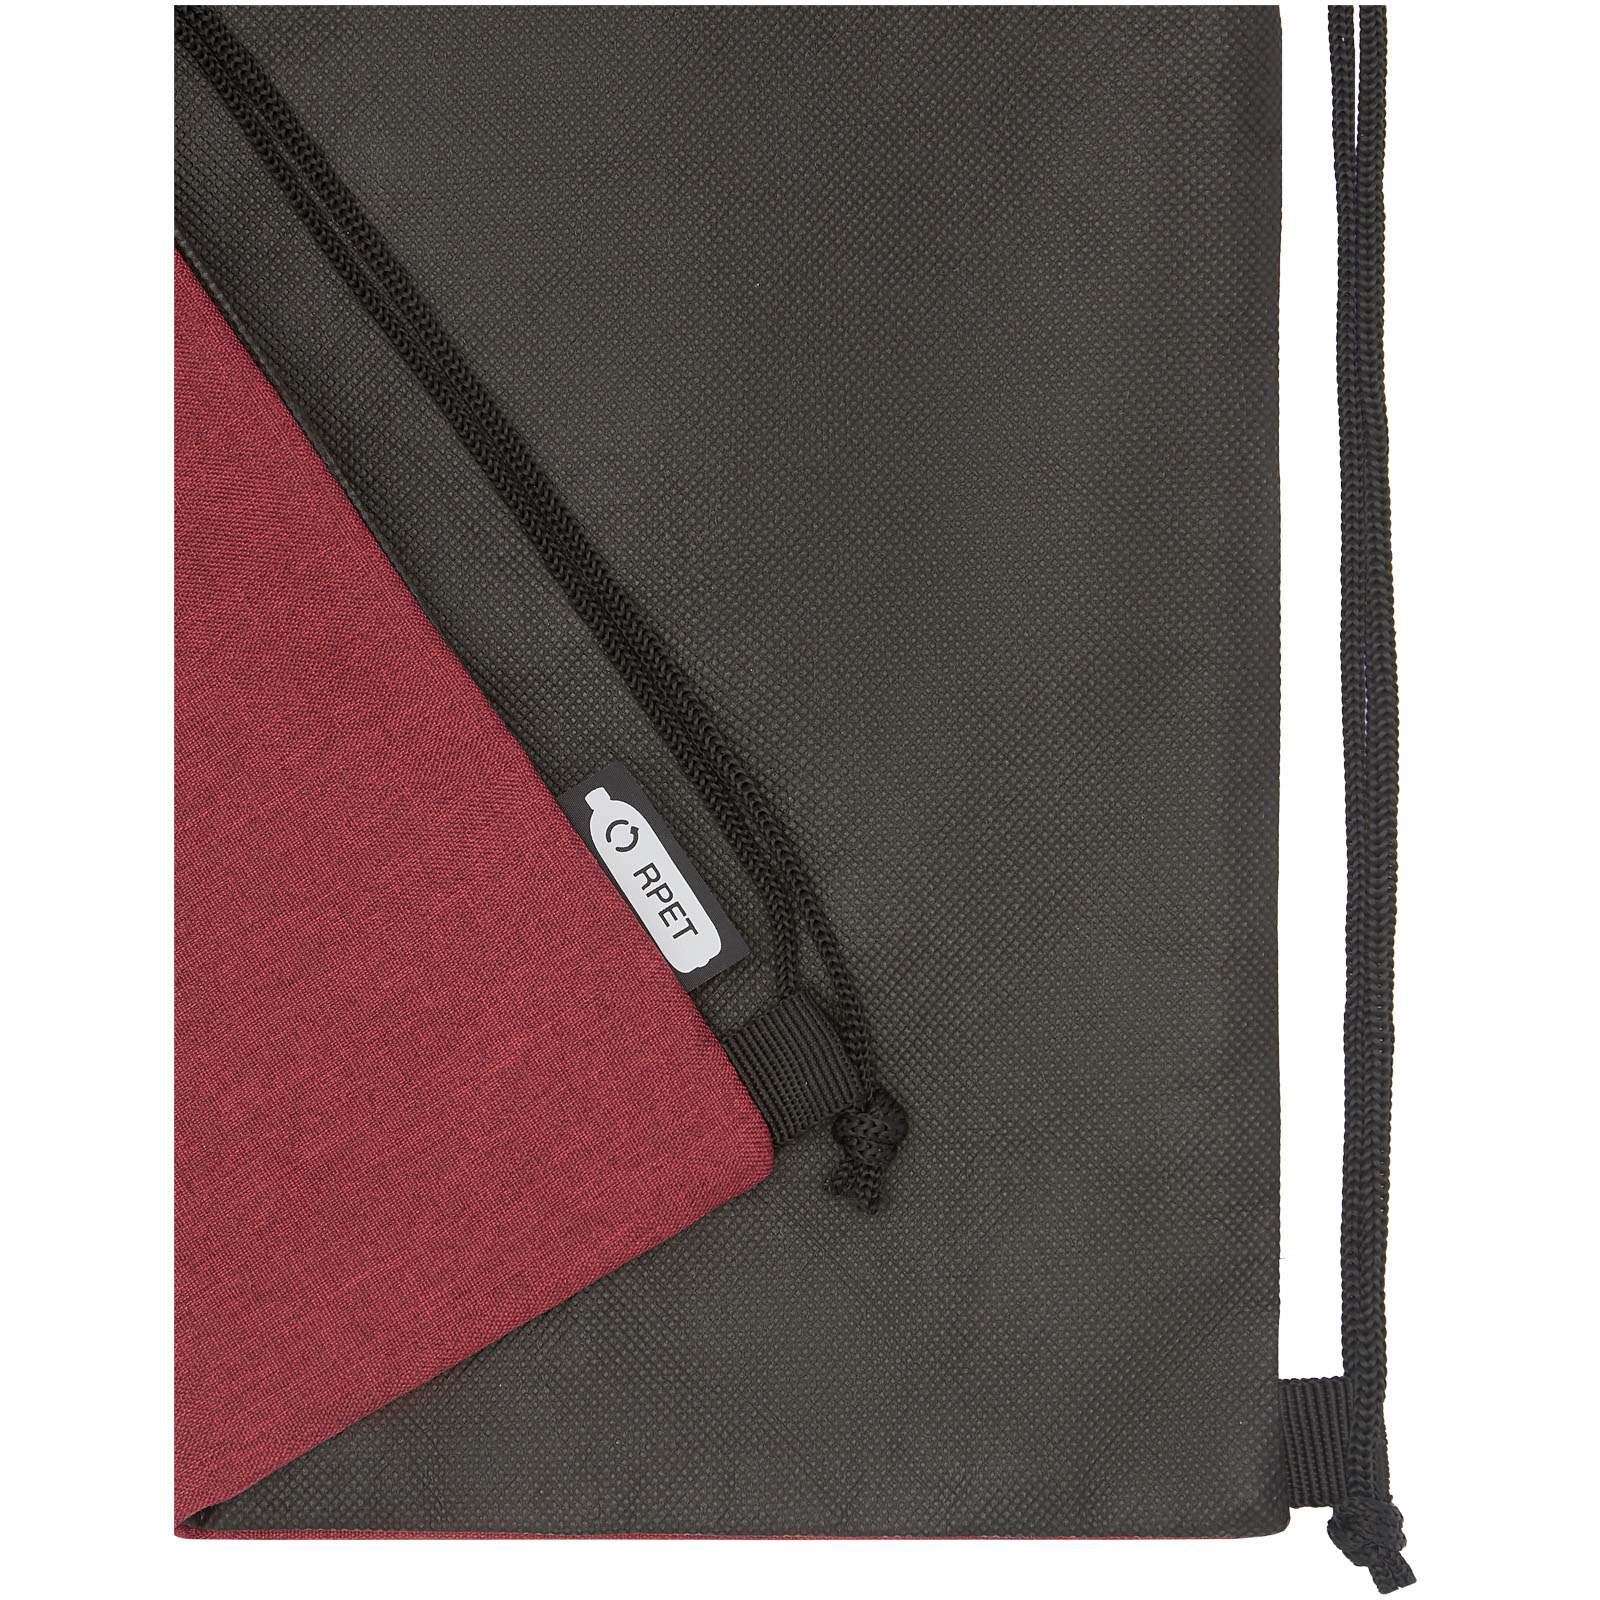 Advertising Drawstring Bags - Ross RPET drawstring bag 5L - 3